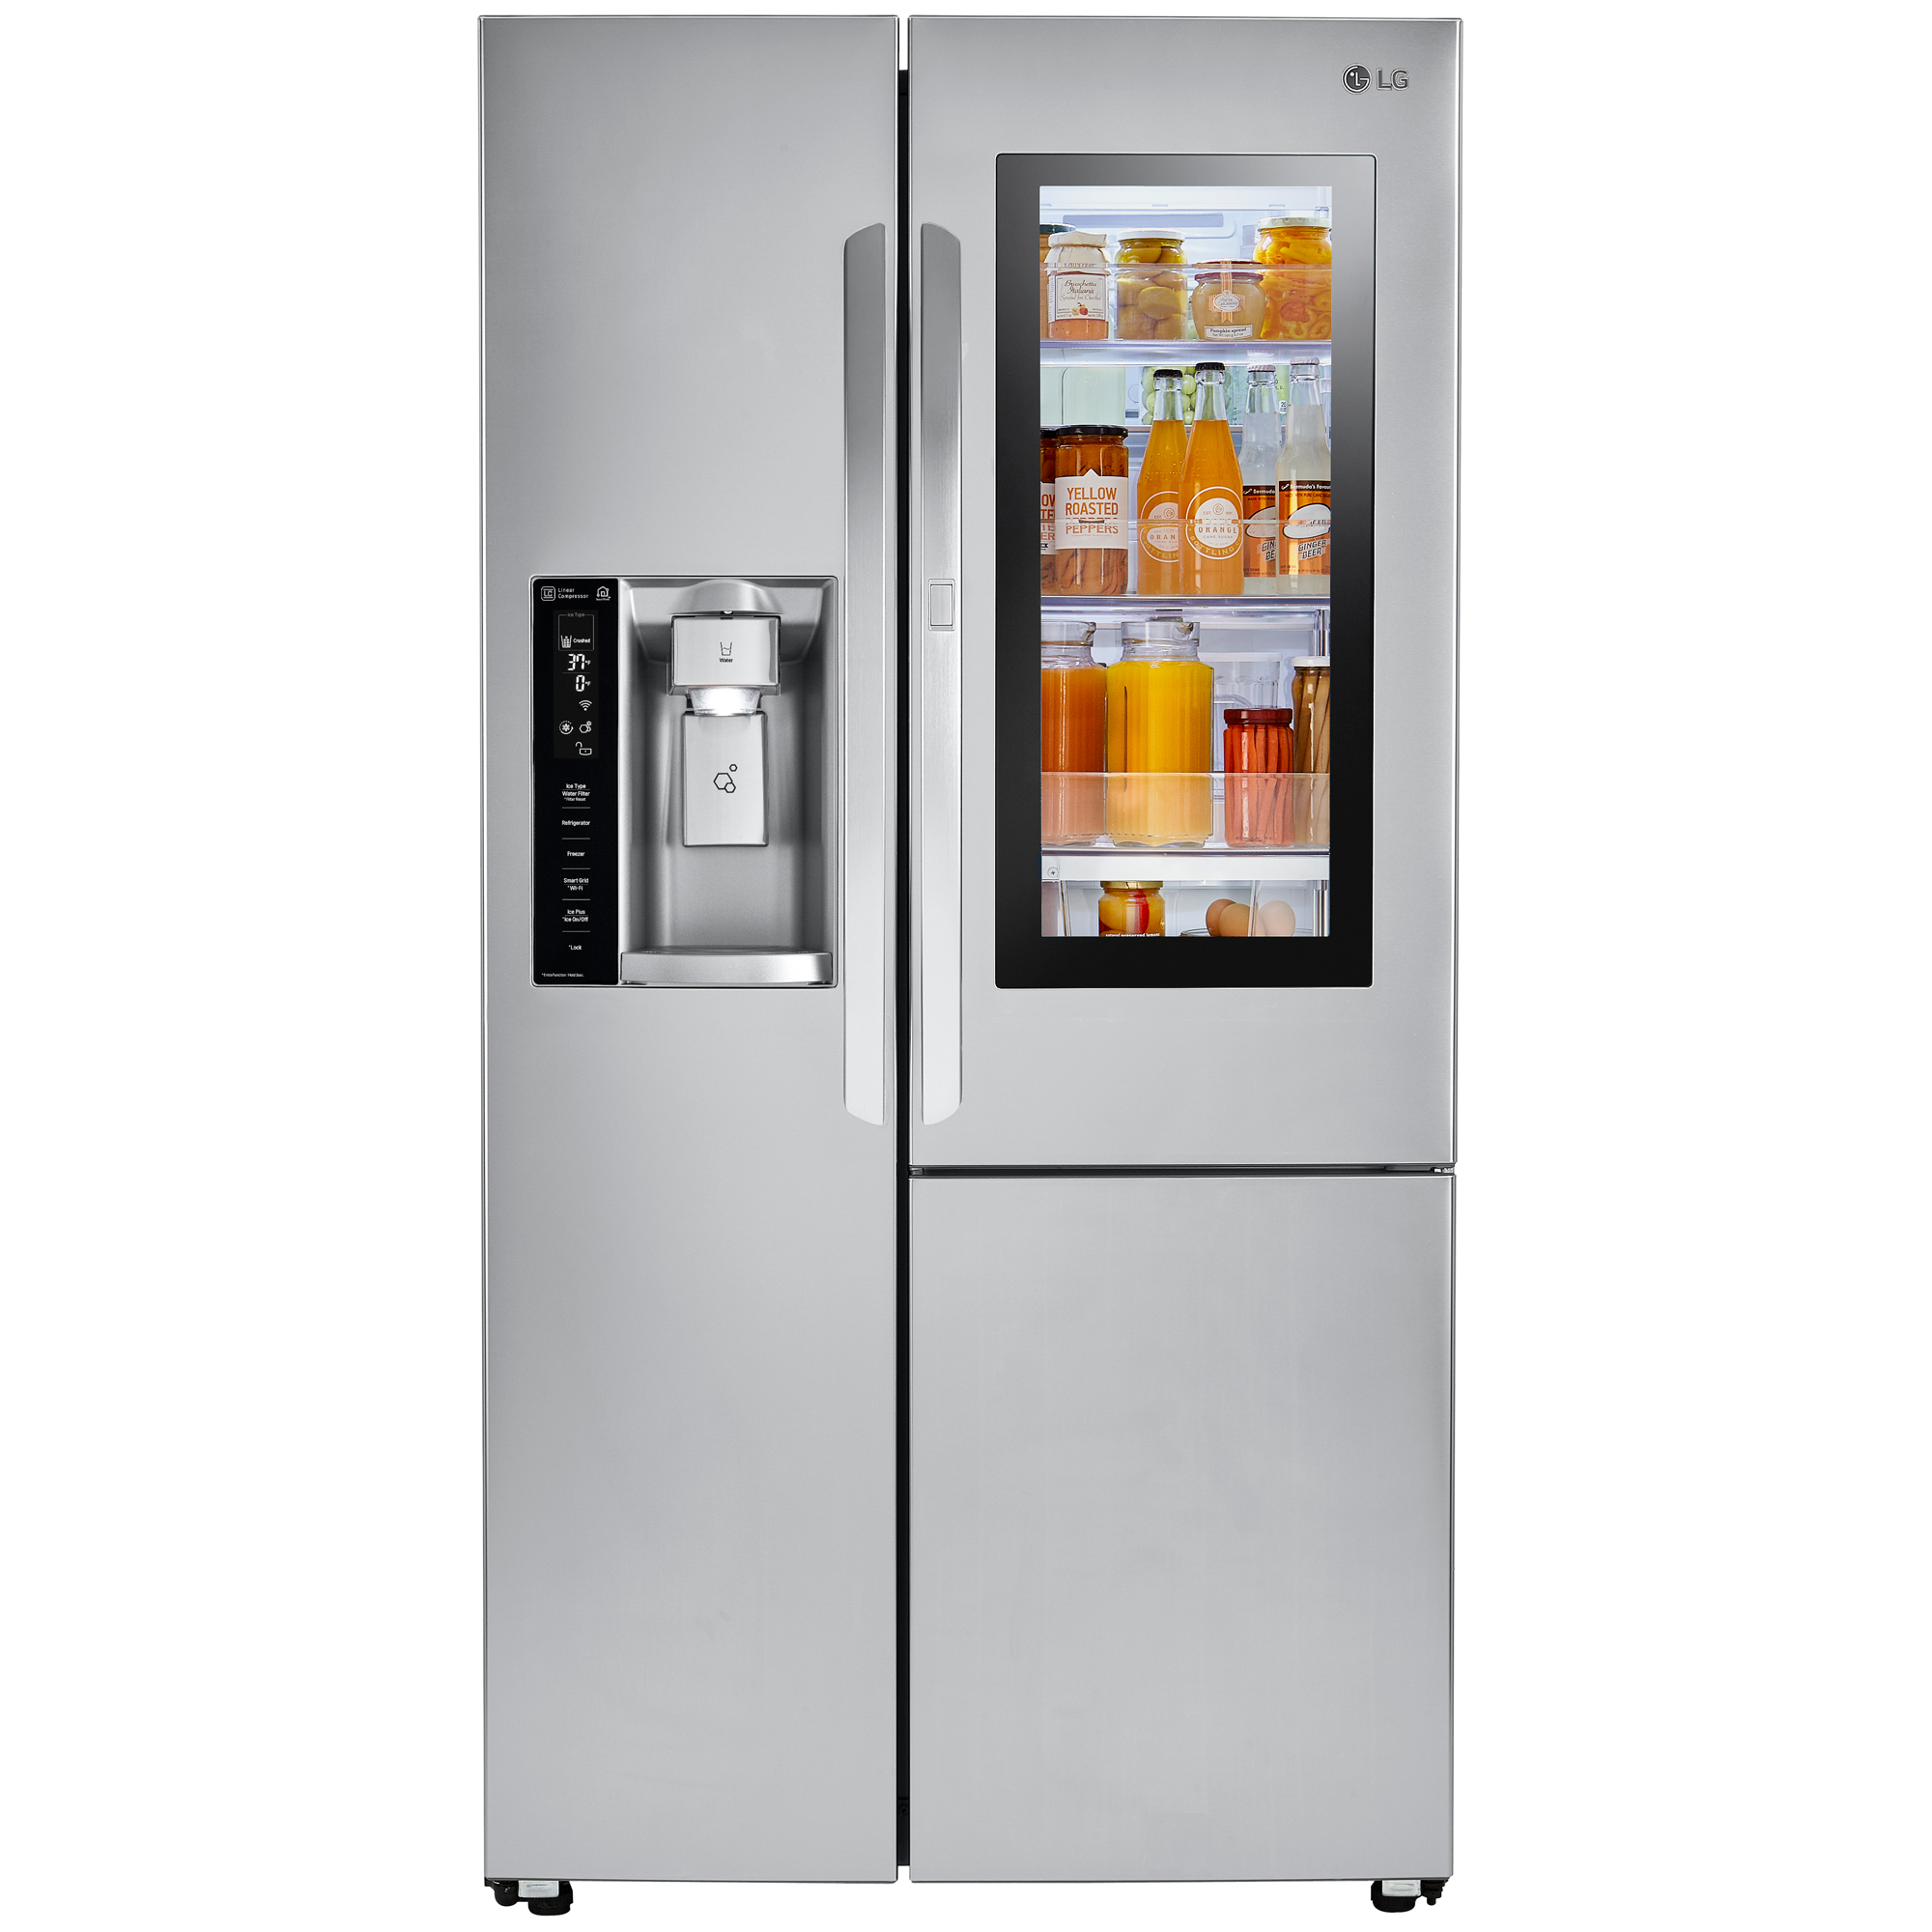 LG LSXS26396S Smart Door Refrigerator - 26.1 cu. ft